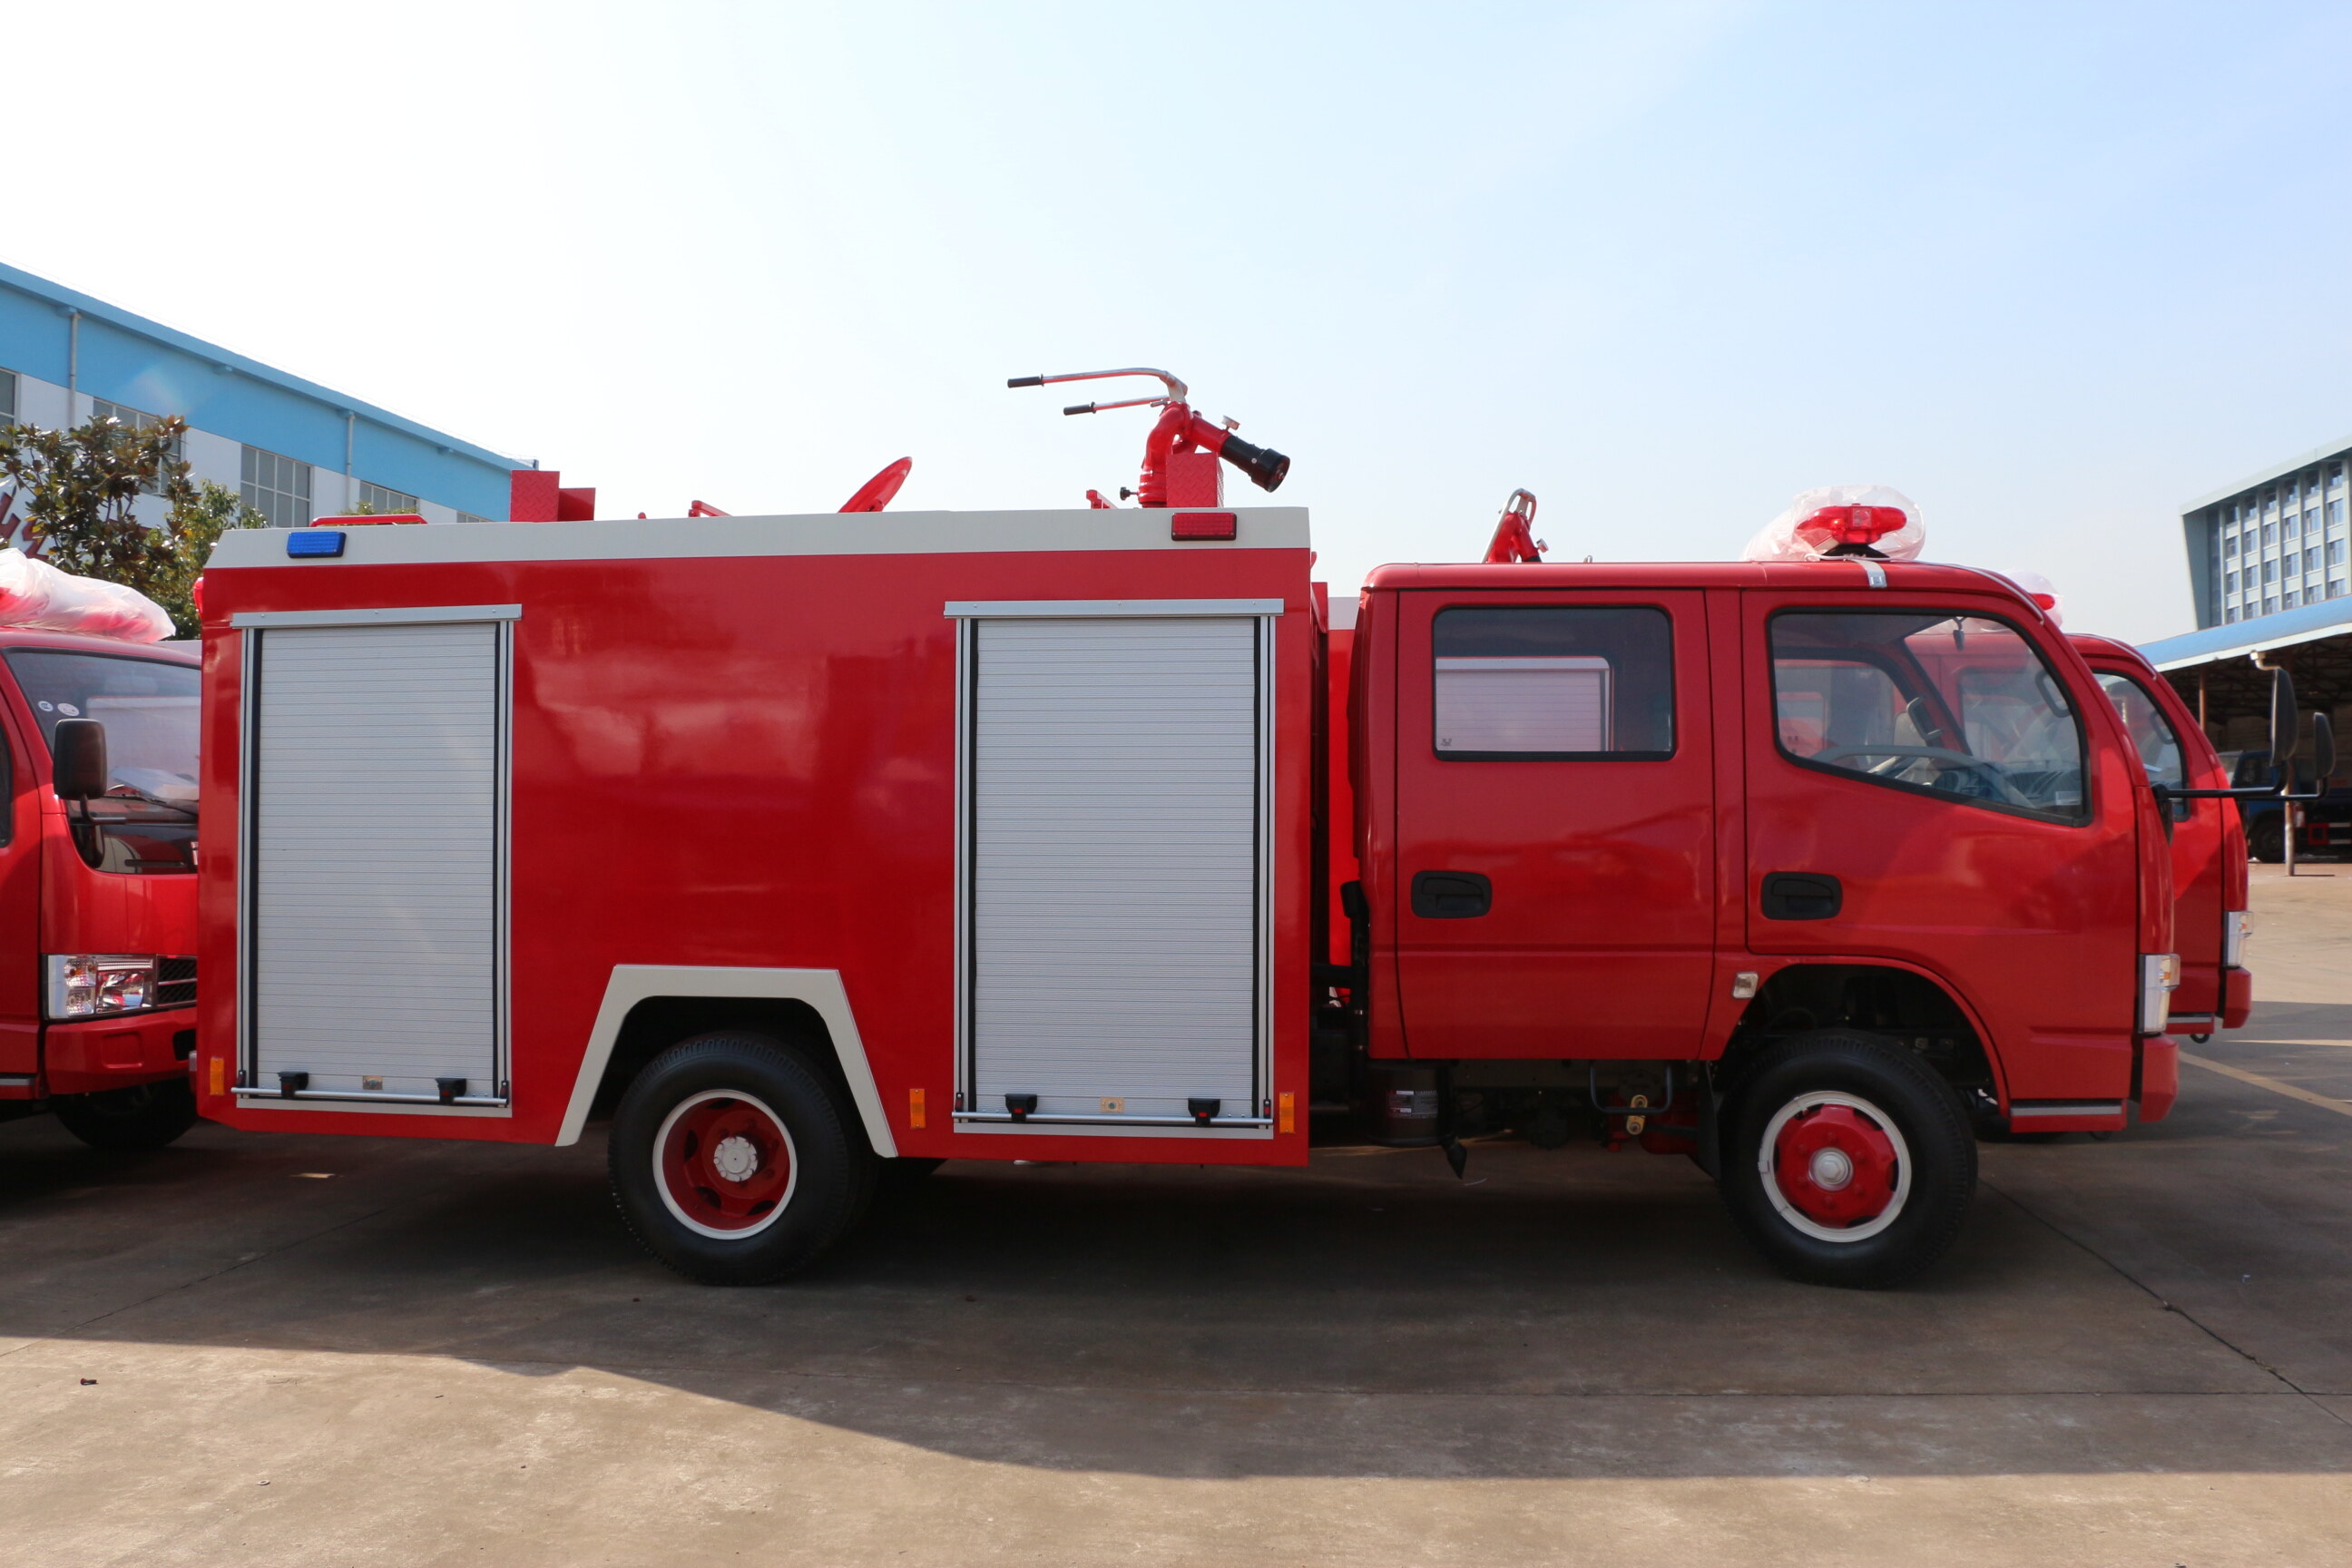 rapid response fire truck
